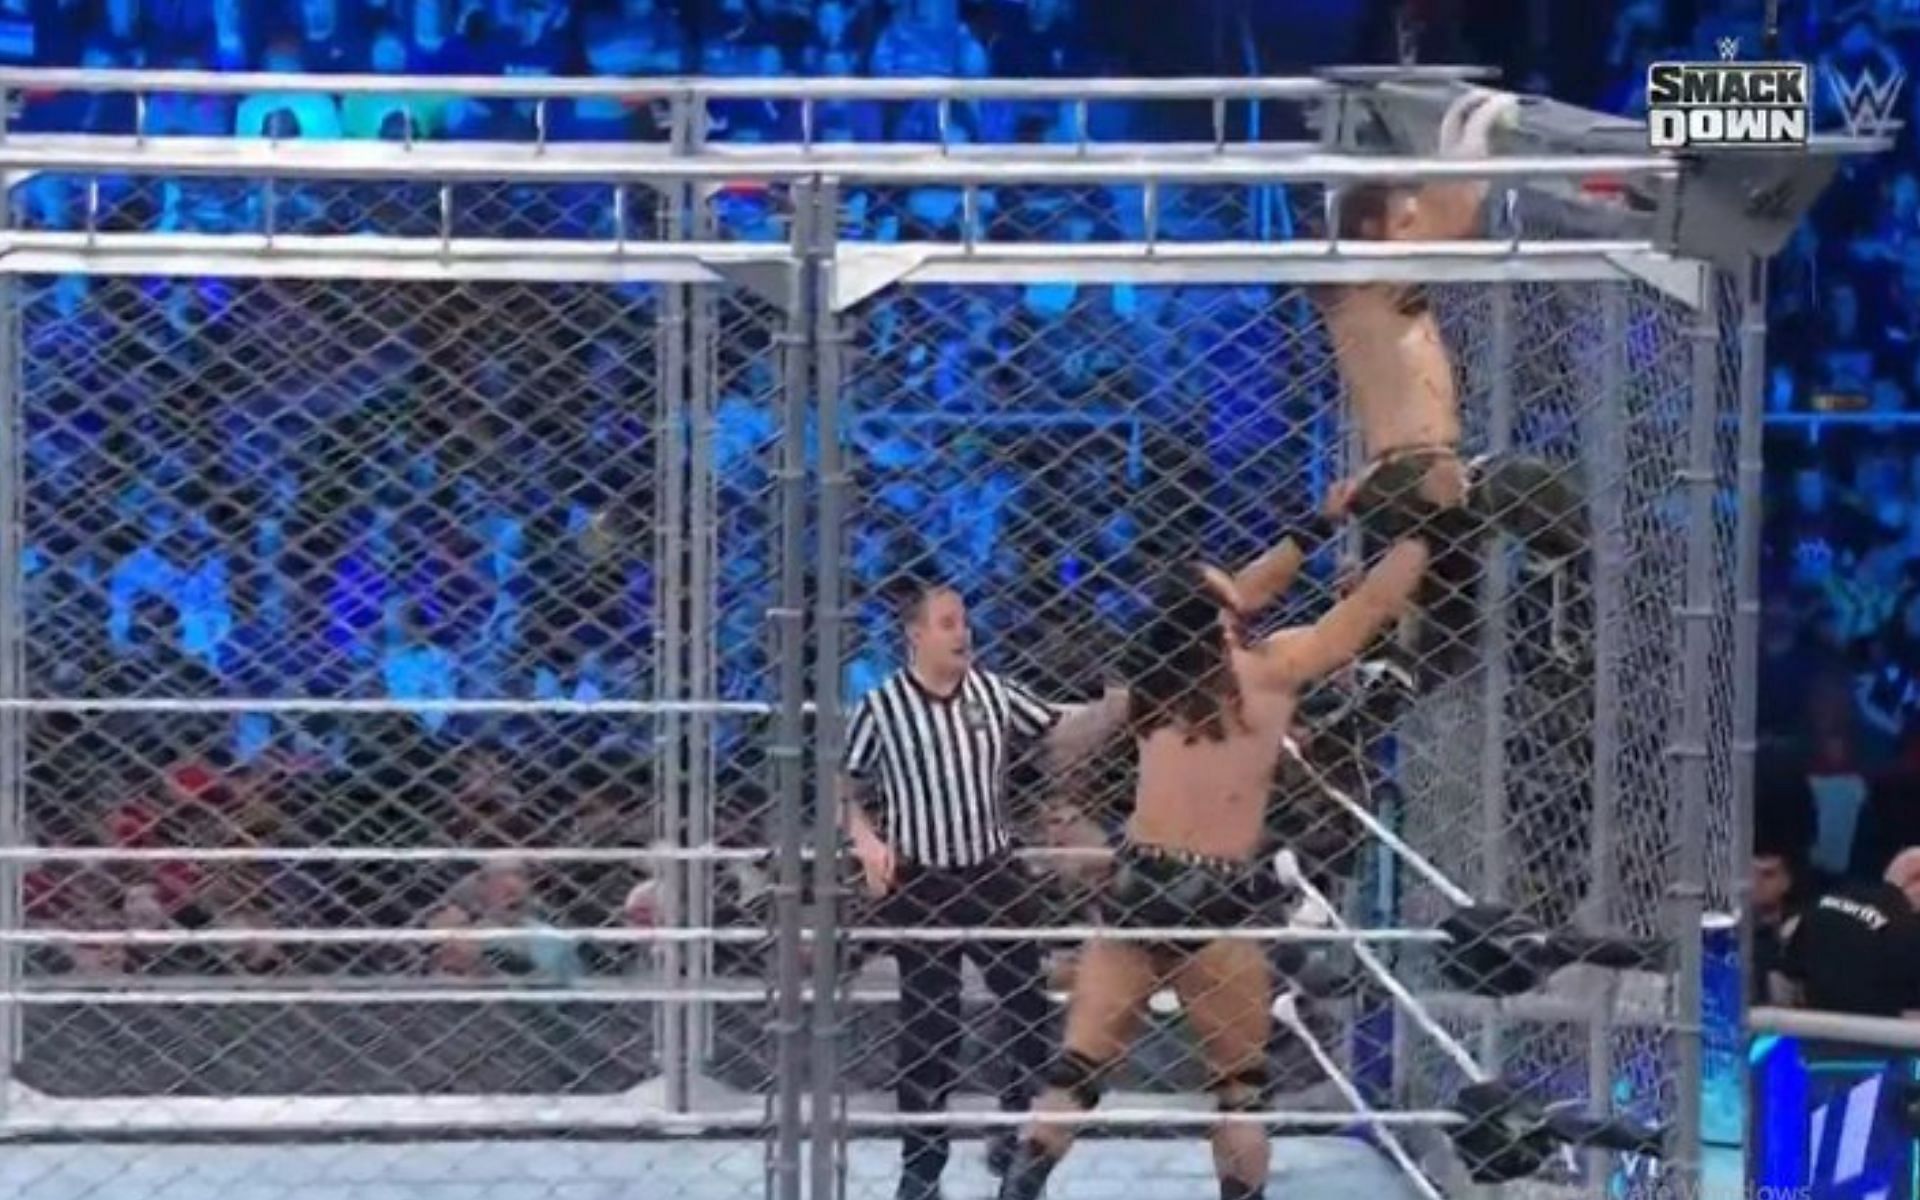 Drew McIntyre vs. Sami Zayn took place inside a steel cage